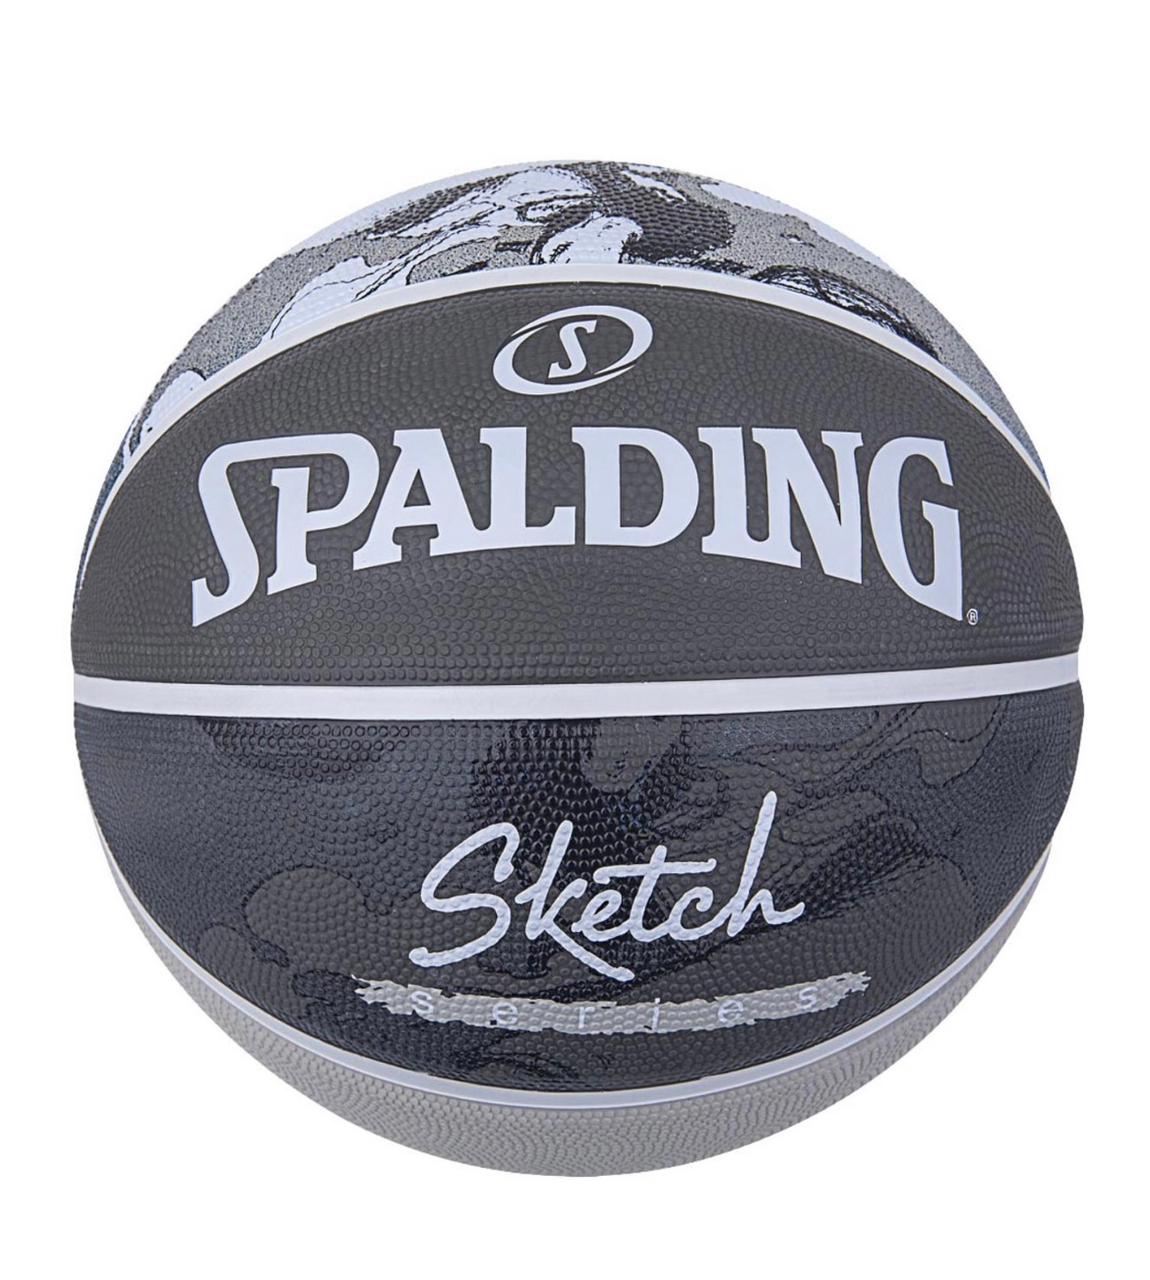 Spalding Sketch Jump Basketball